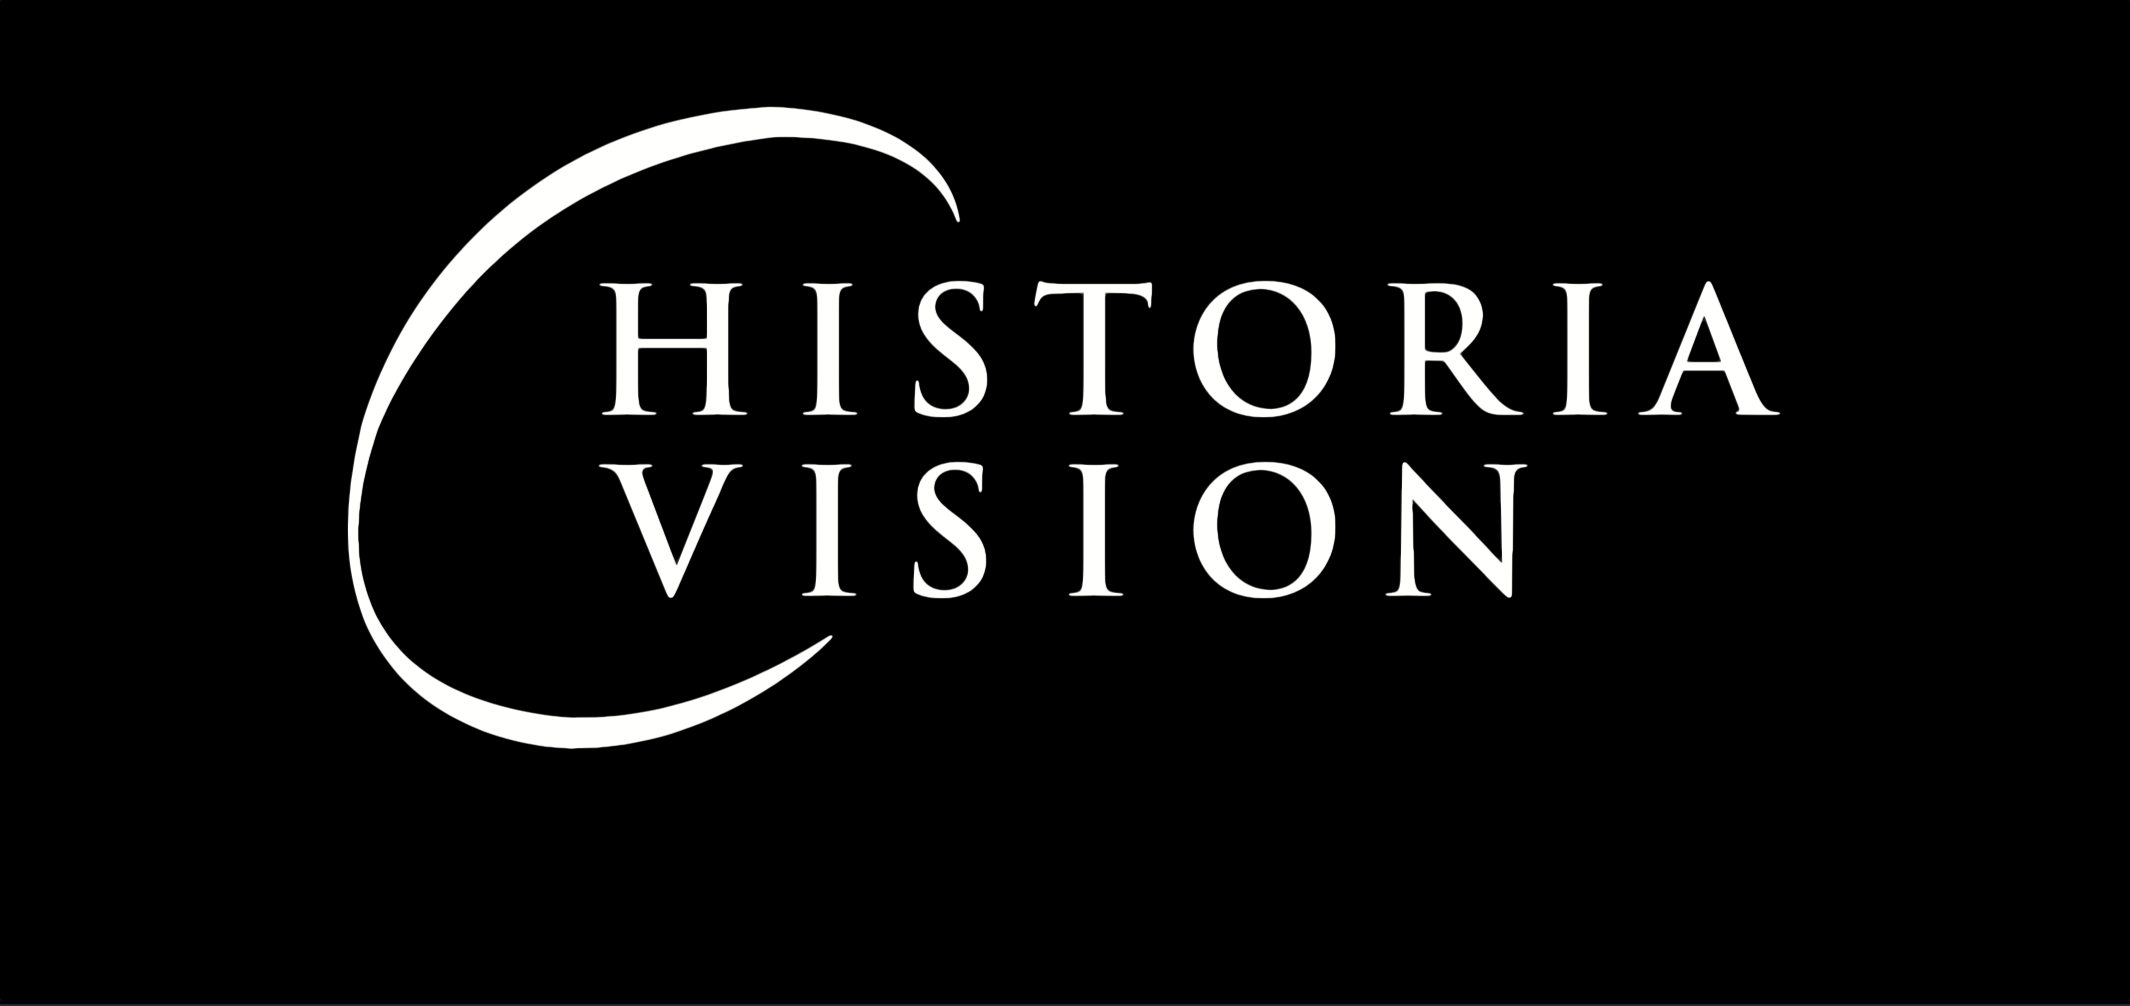 Historiavision